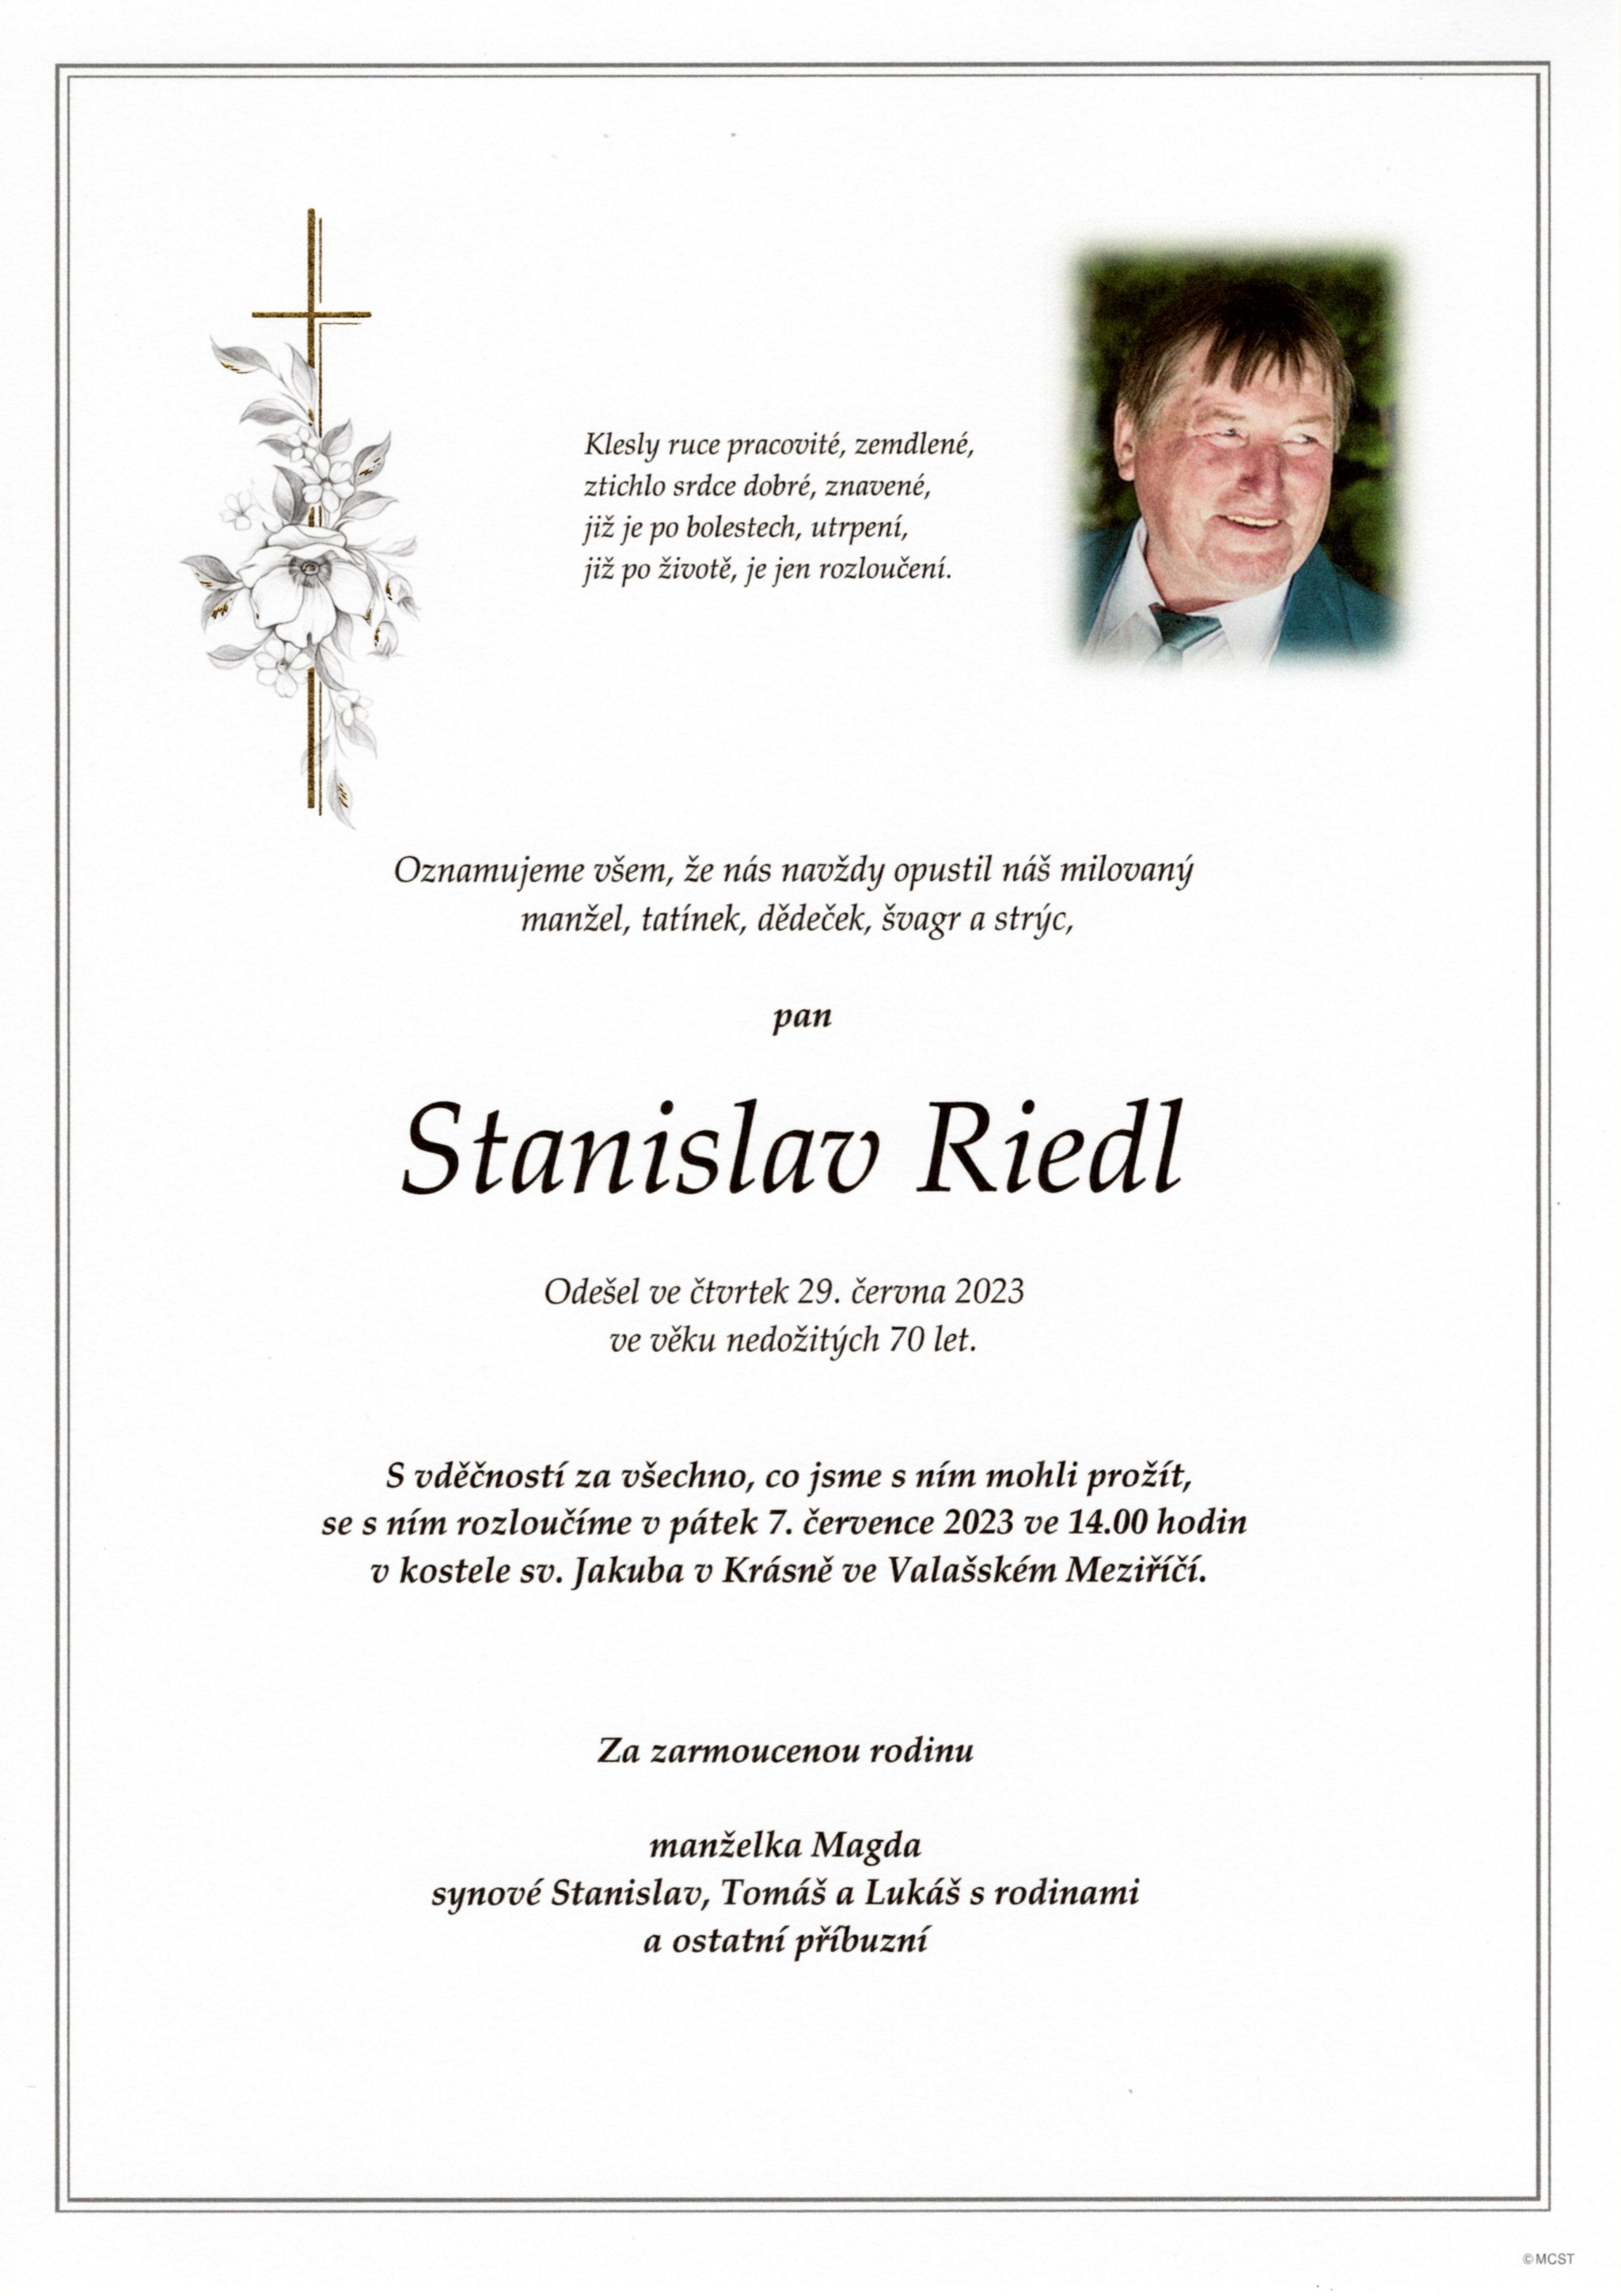 Stanislav Riedl